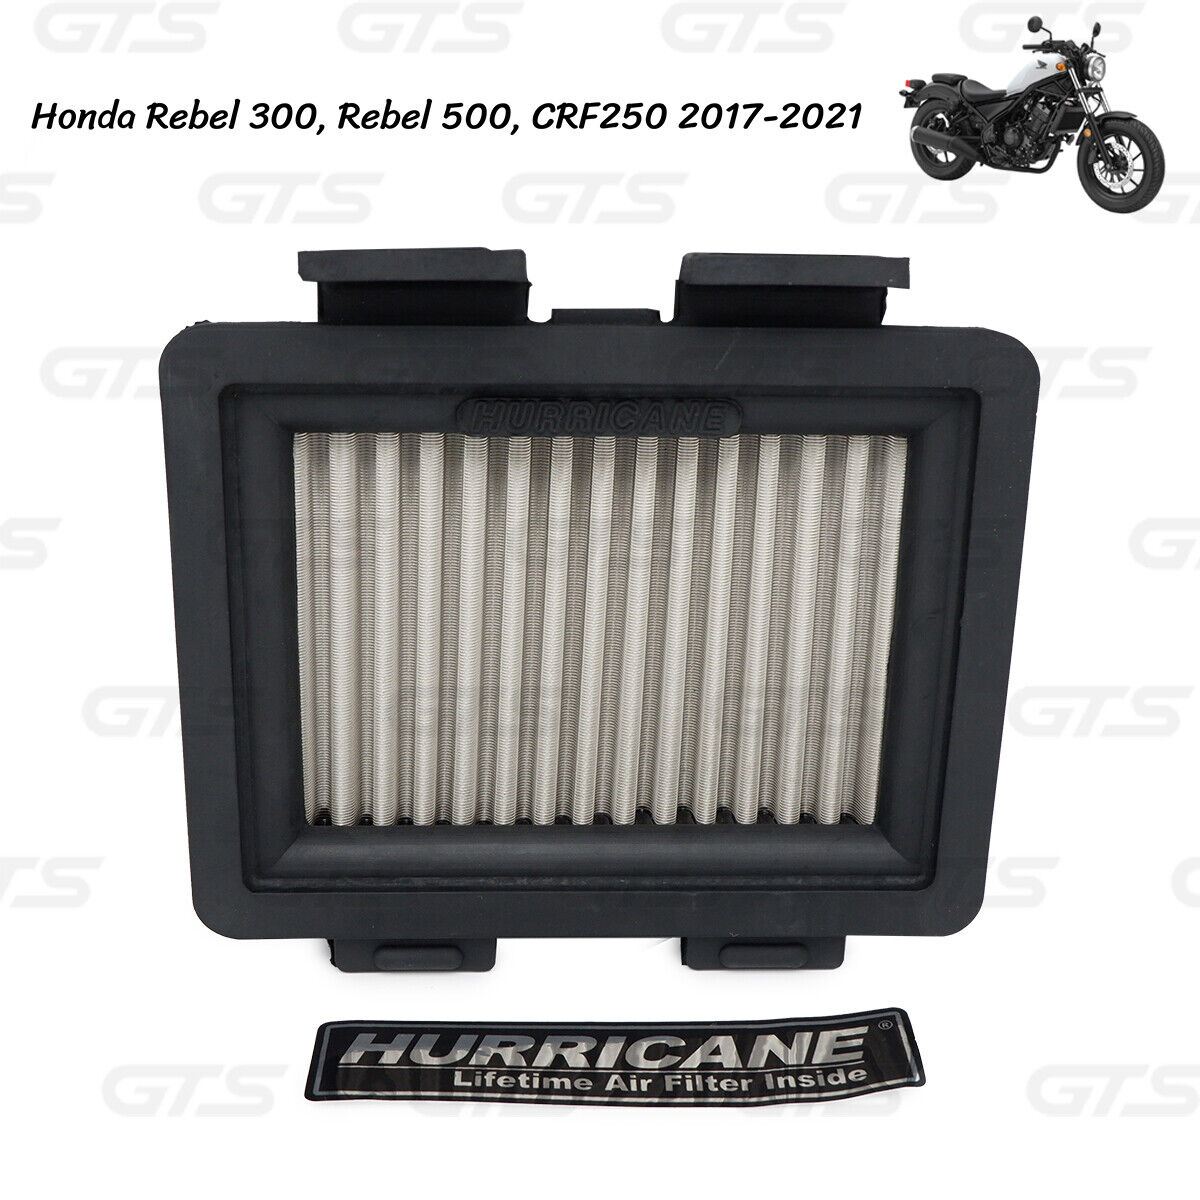 For Honda Rebel 300 Rebel 500 CRF250 2017 21 Hurricance Stainless Air Filter